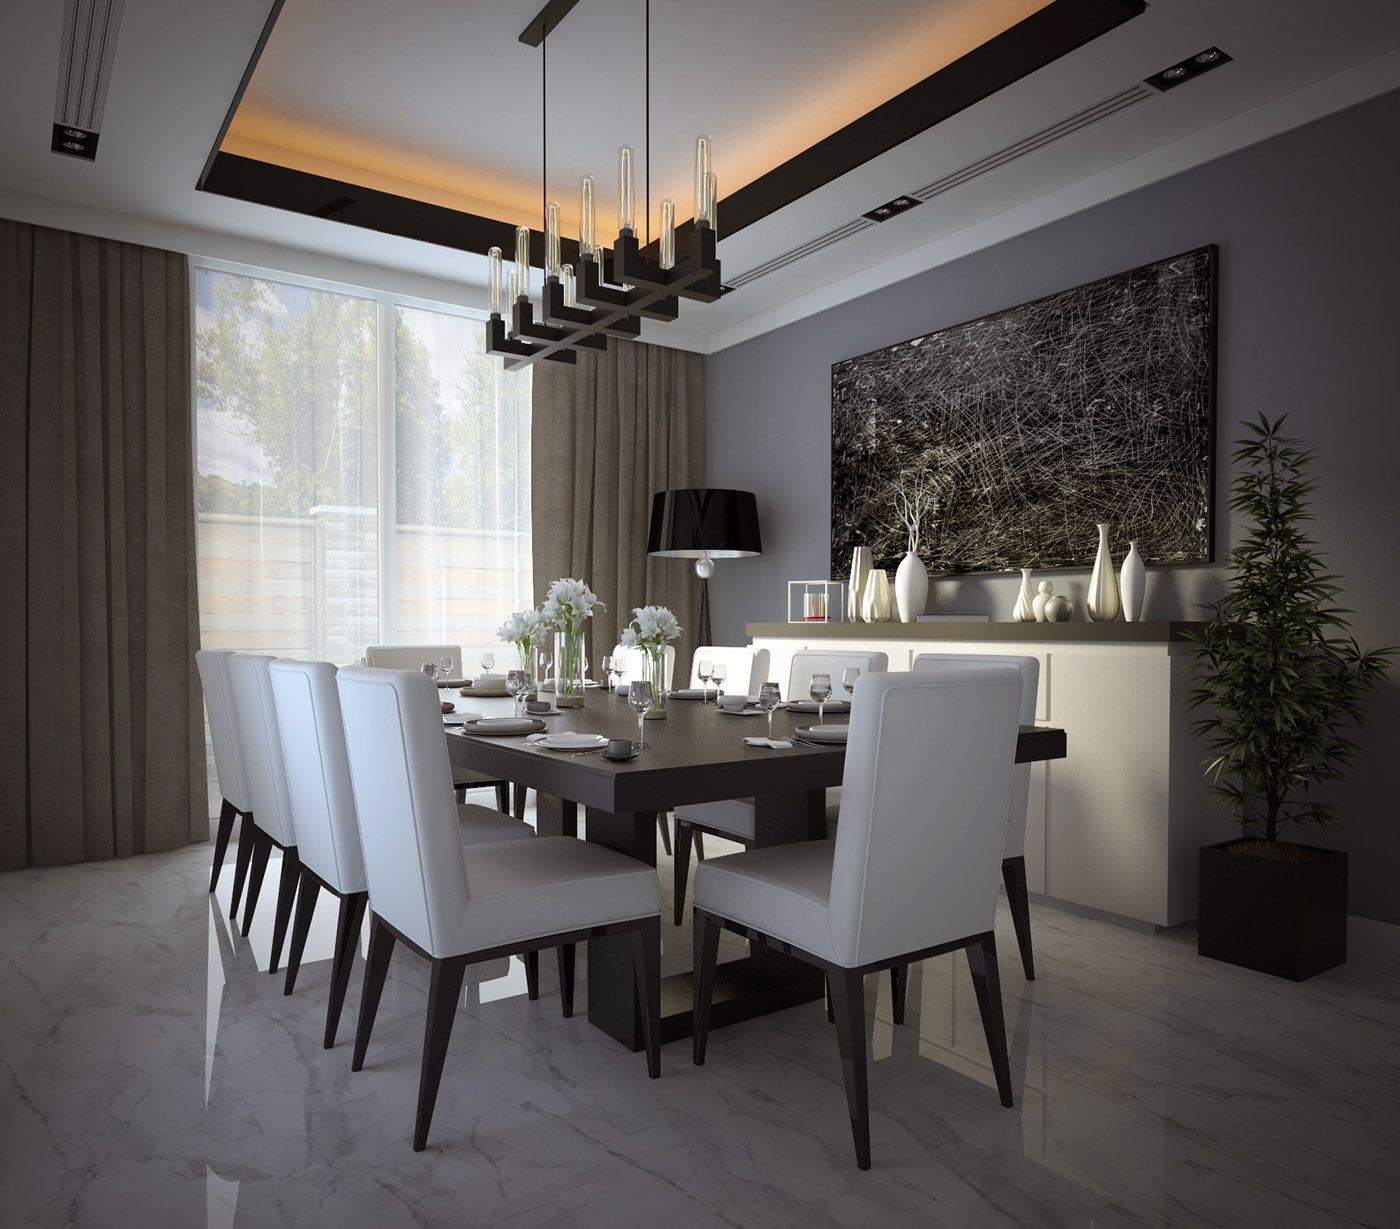 Modern Interior Design - Dining Room on Behance